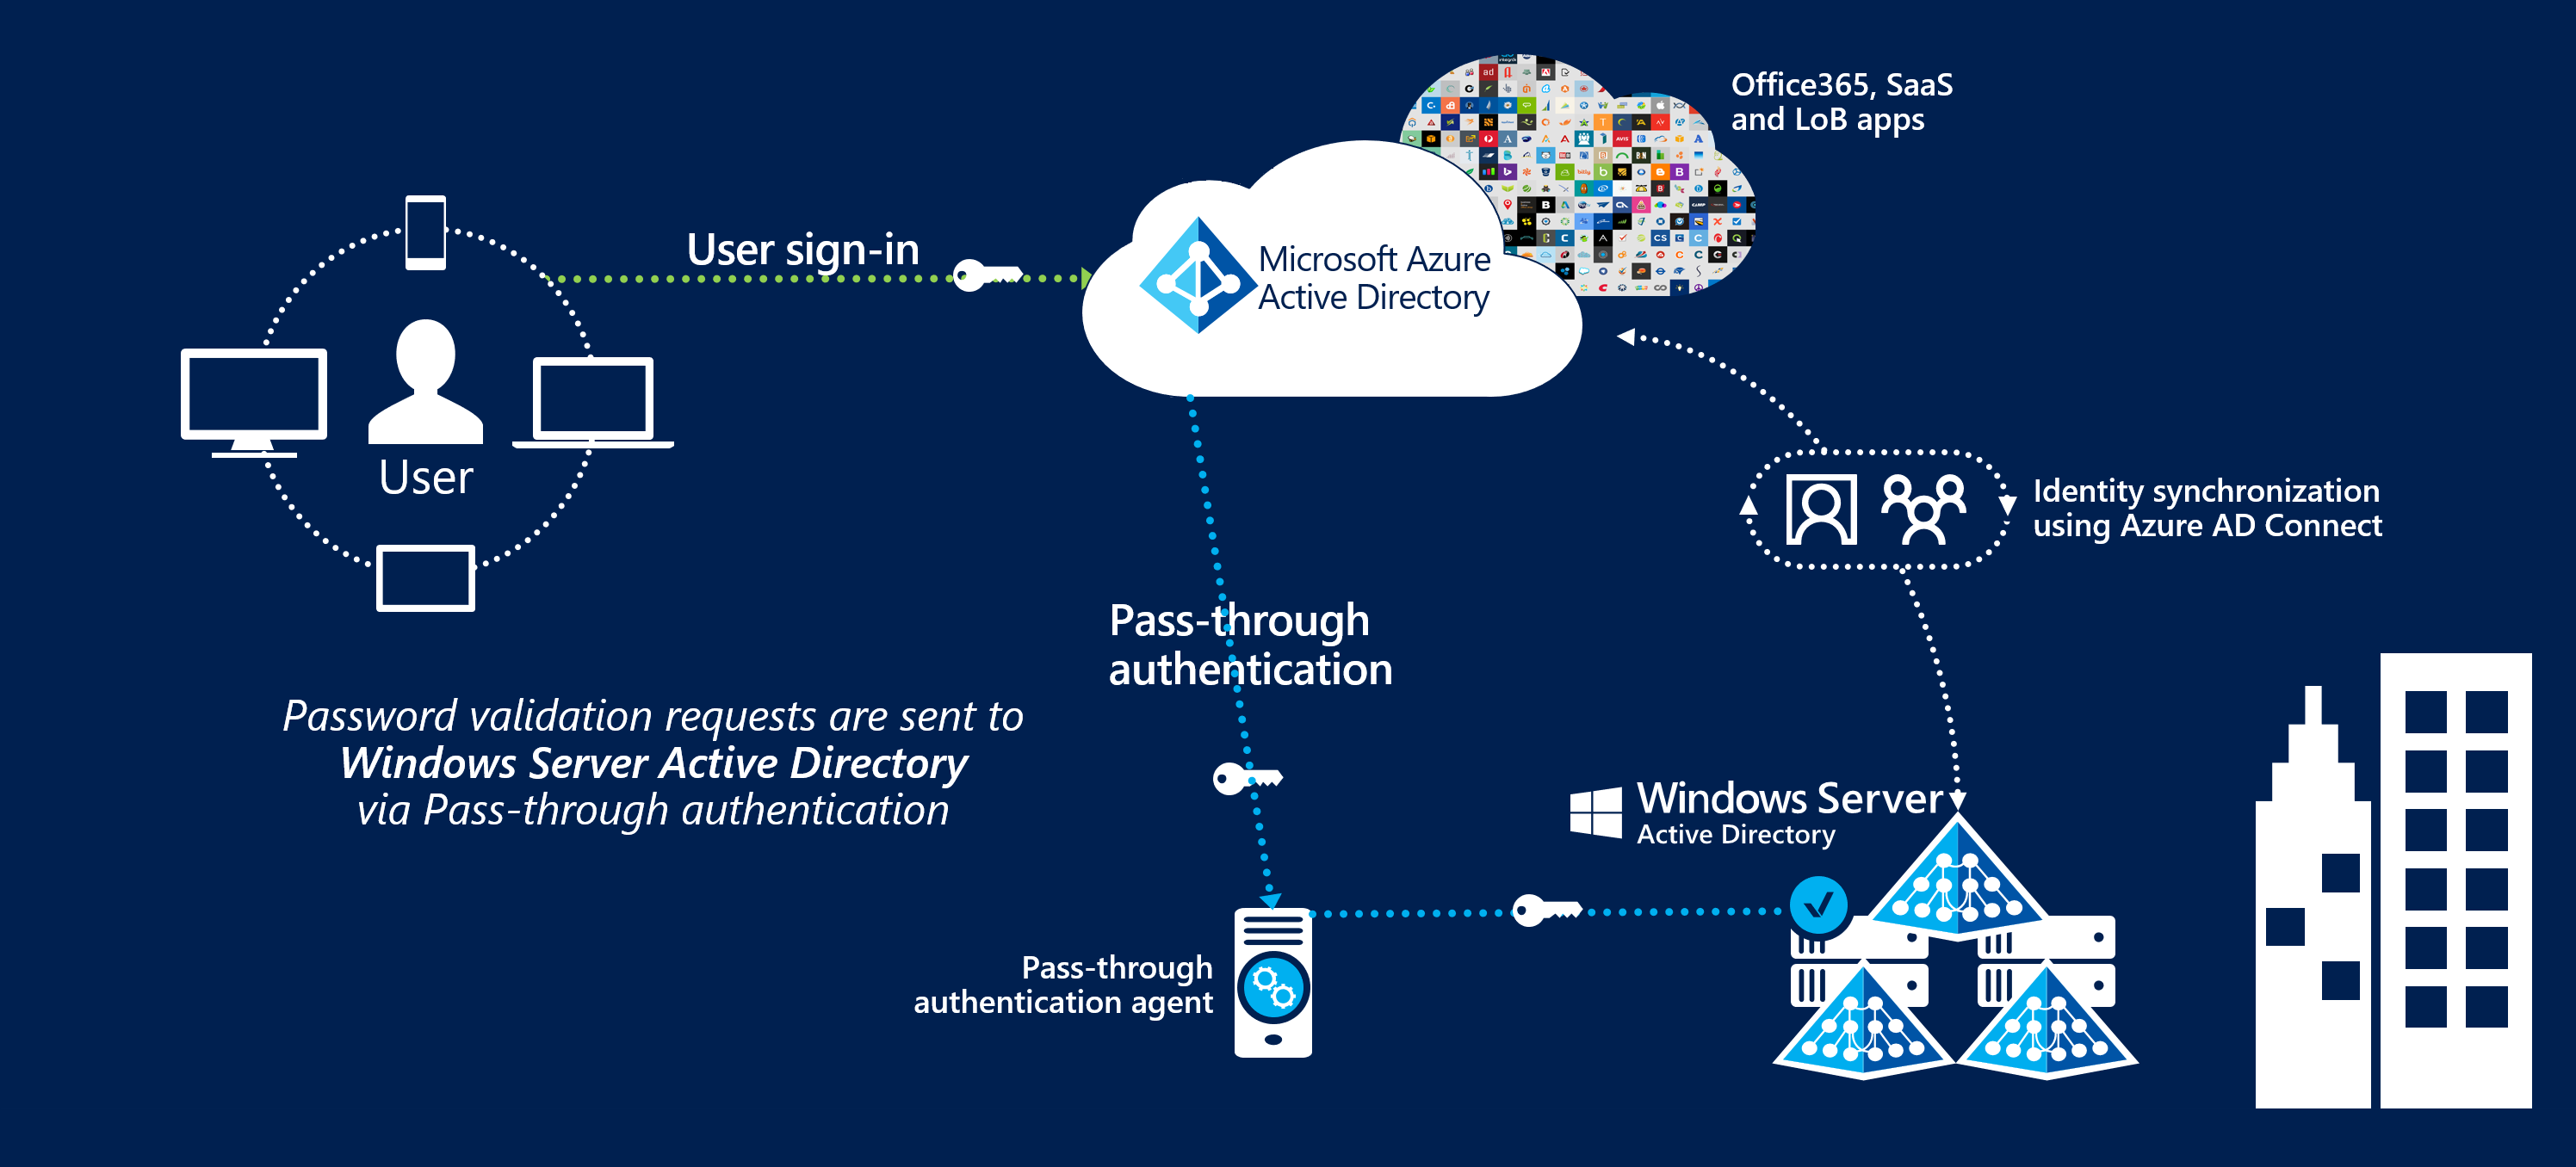 Authentification directe Microsoft Entra